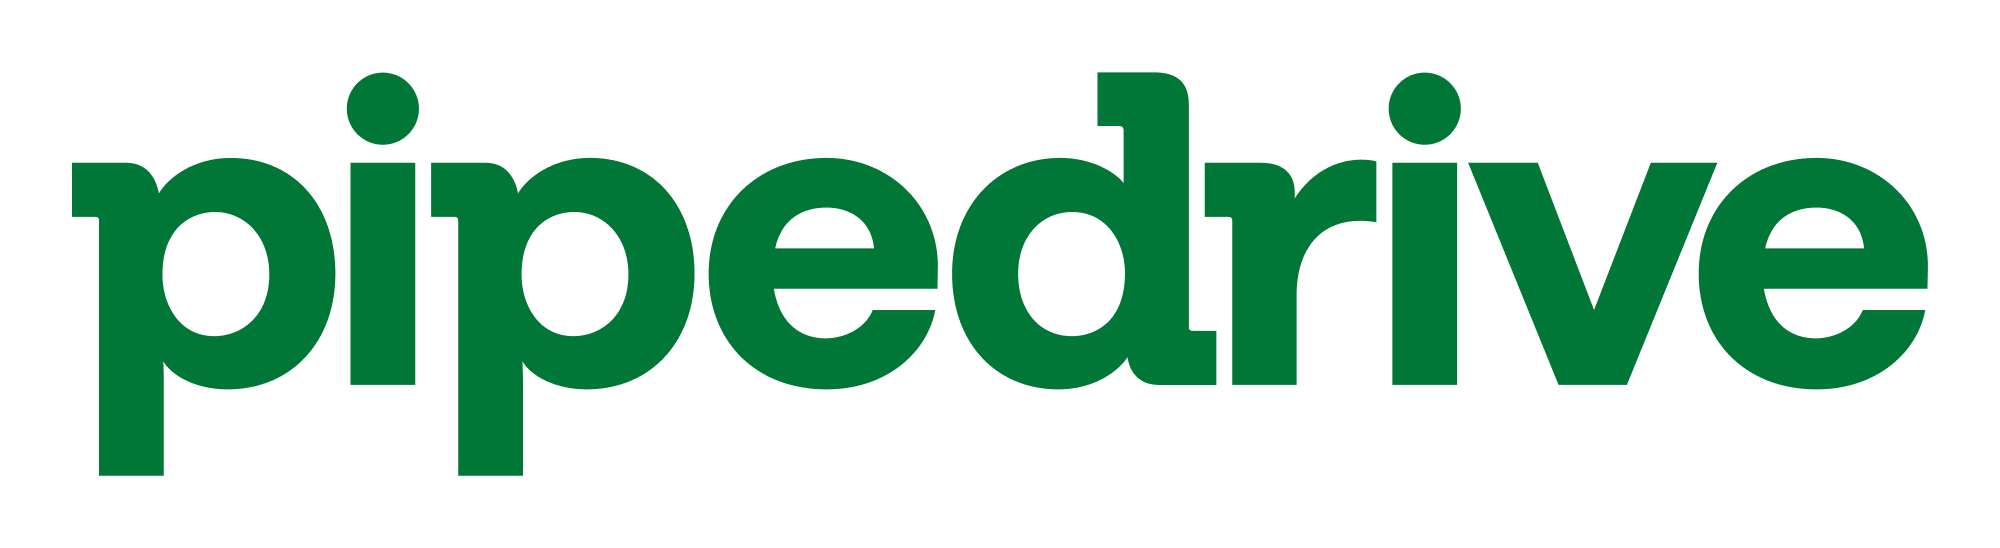 Pipedrive green logo